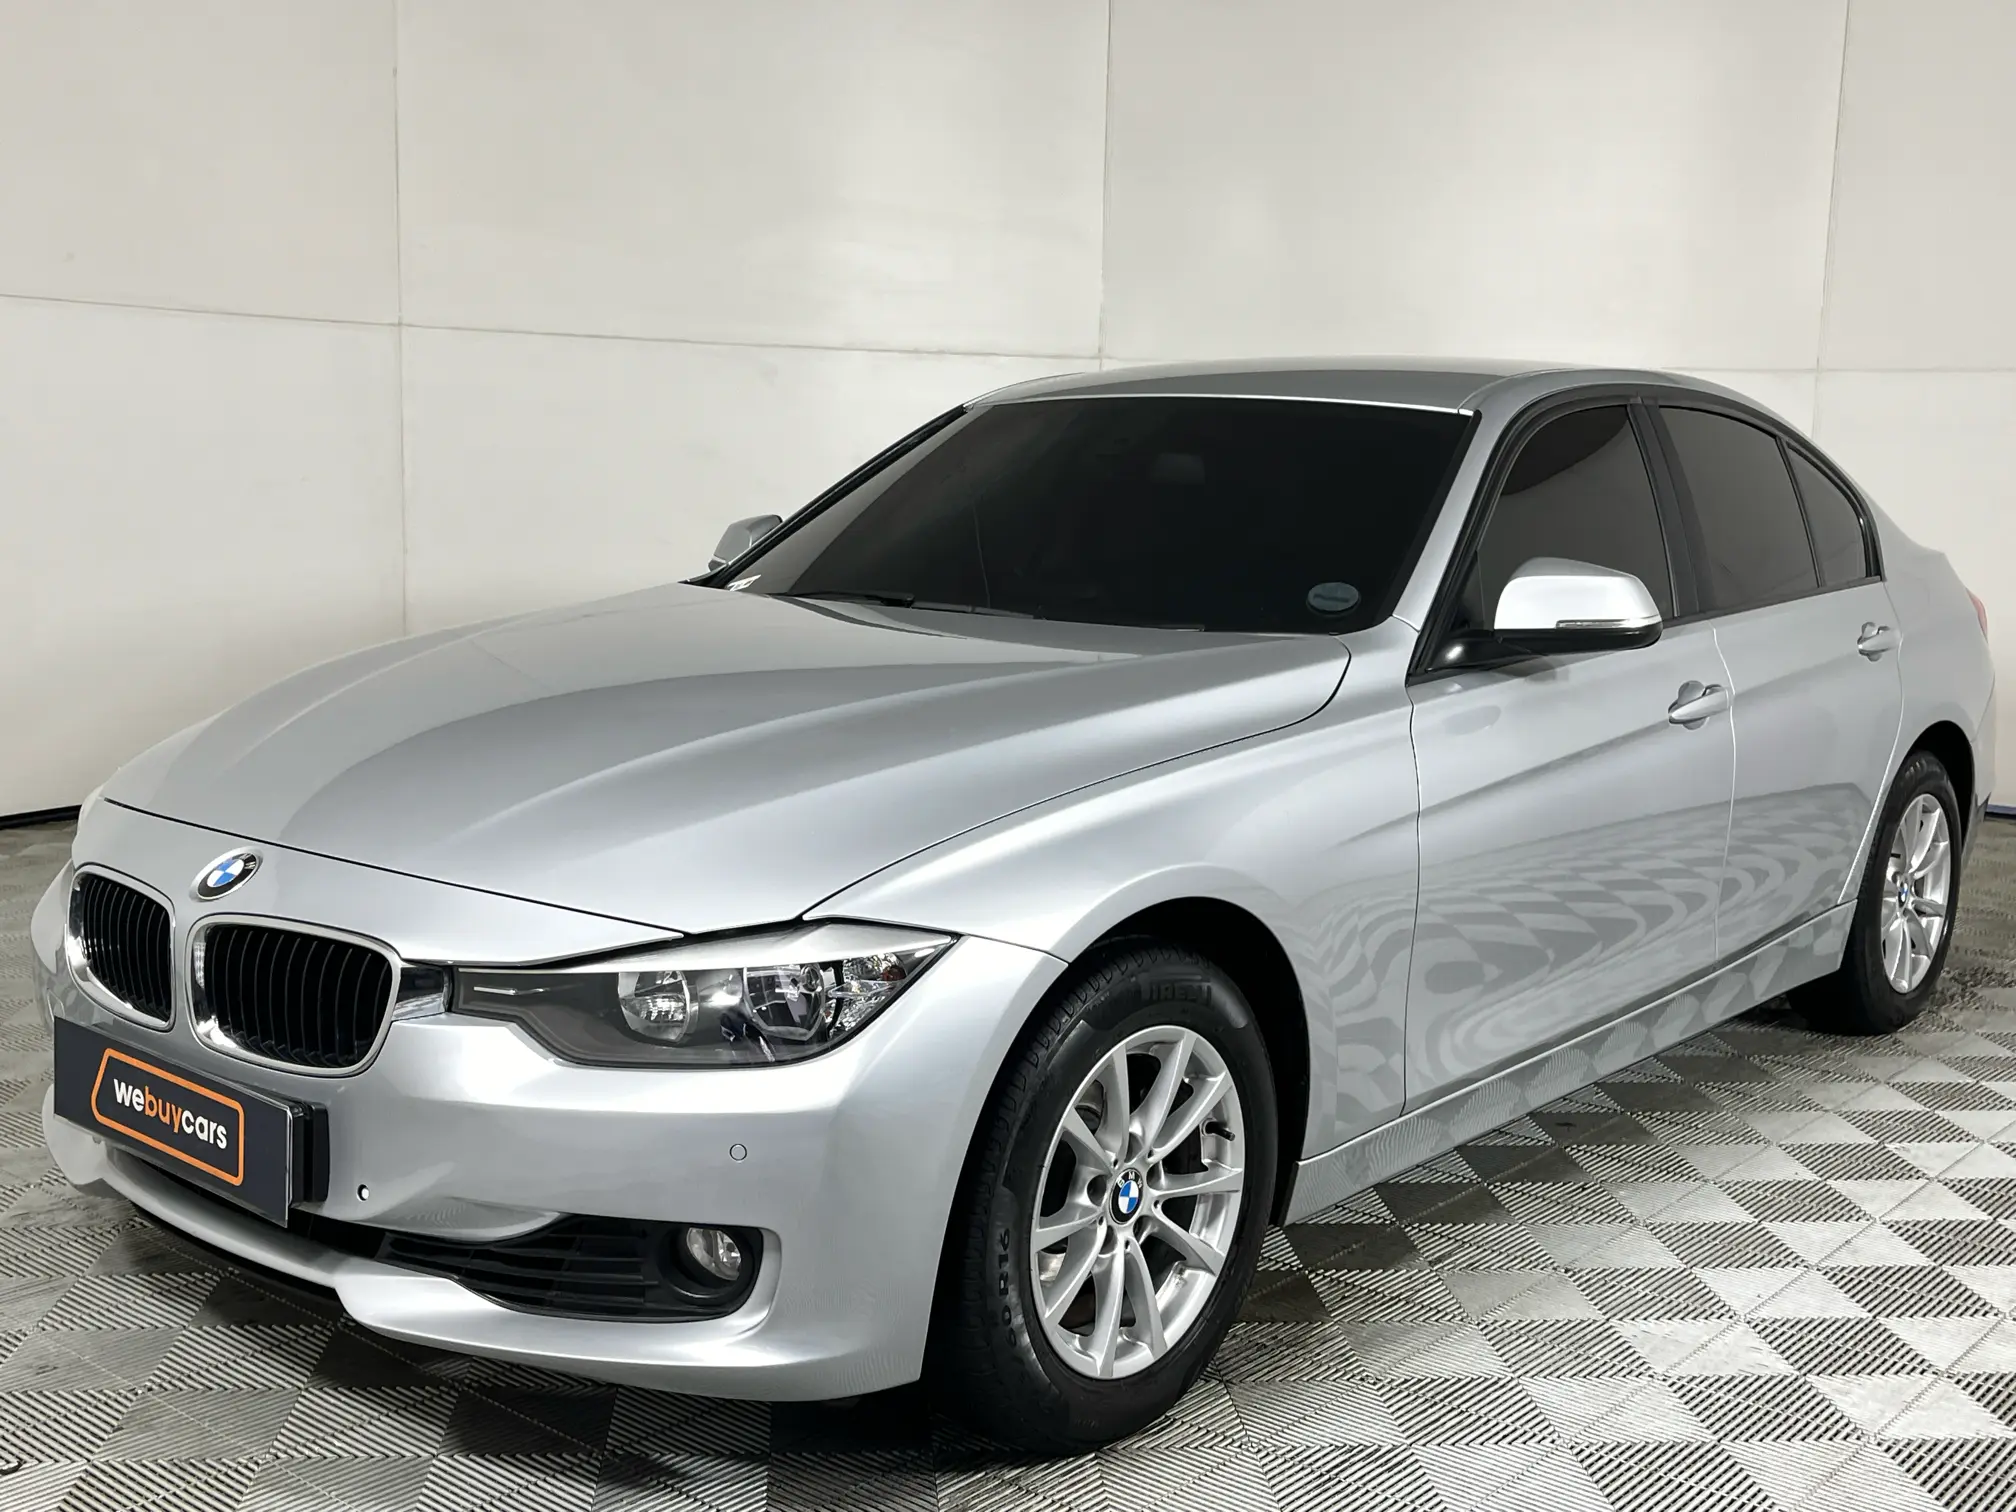 2014 BMW 3 Series 320i Auto (F30)